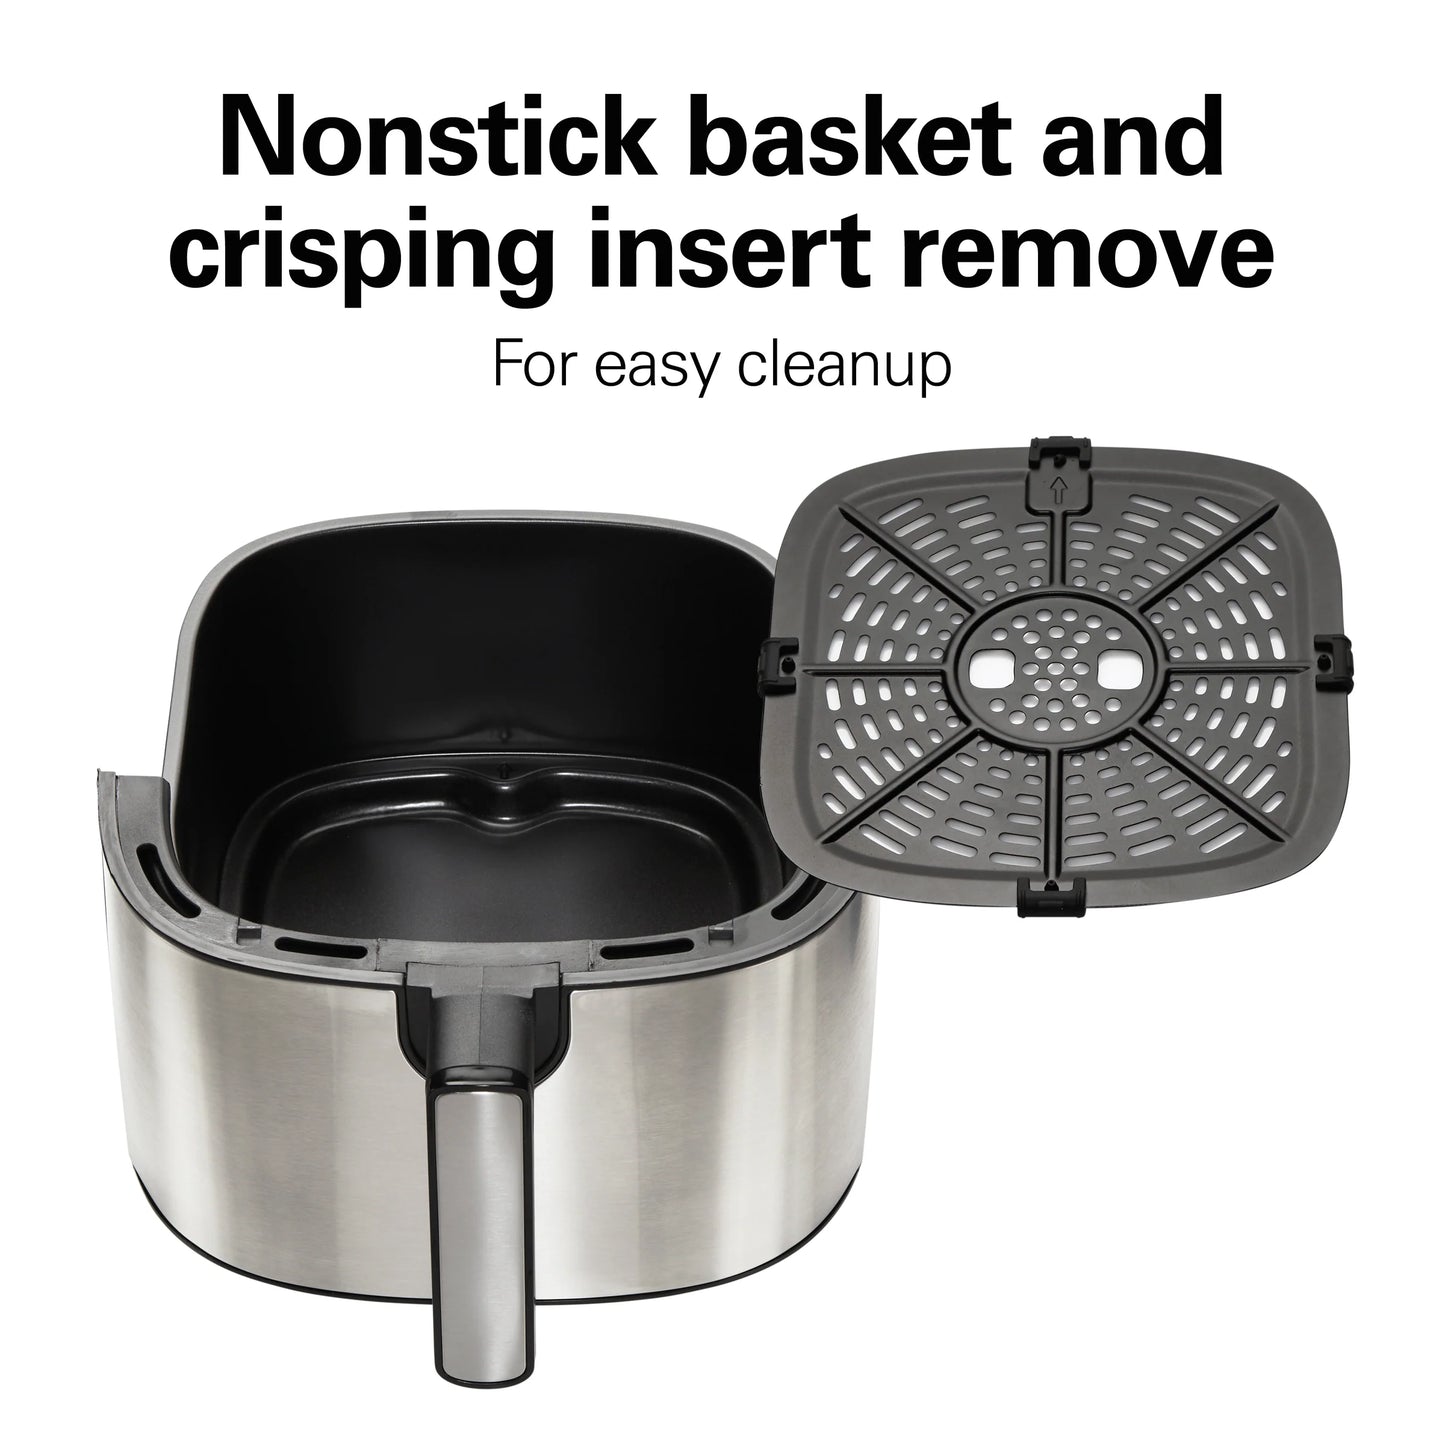 Hamilton Beach Digital Air Fryer with Nonstick Basket 5.6L, 1700 Watt